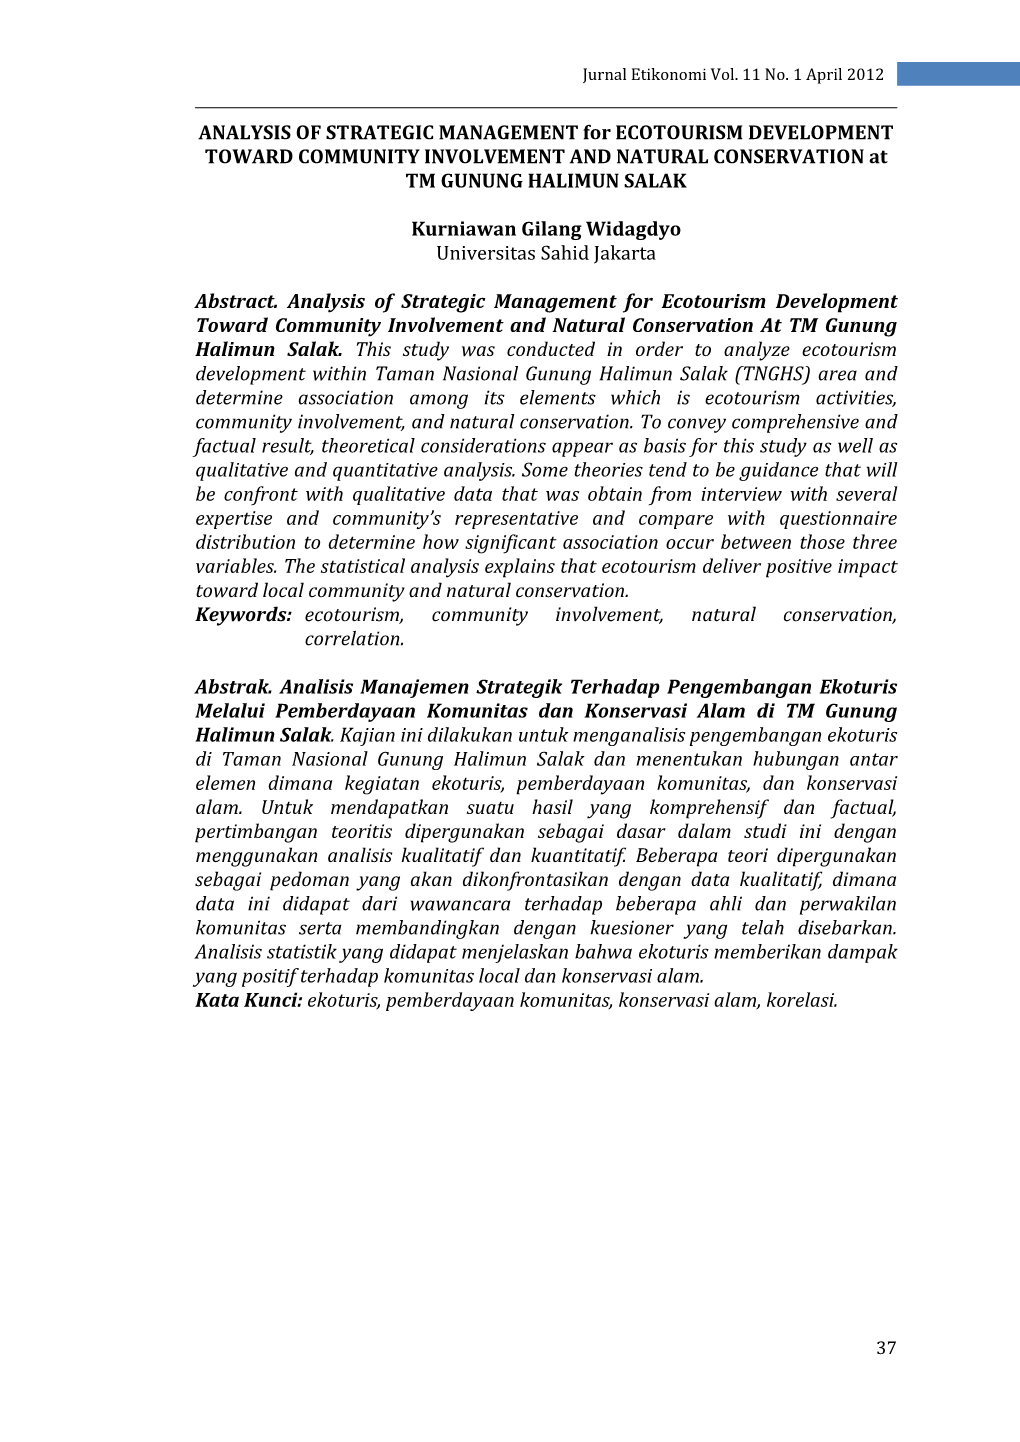 ANALYSIS of STRATEGIC MANAGEMENT for ECOTOURISM DEVELOPMENT TOWARD COMMUNITY INVOLVEMENT and NATURAL CONSERVATION at TM GUNUNG HALIMUN SALAK